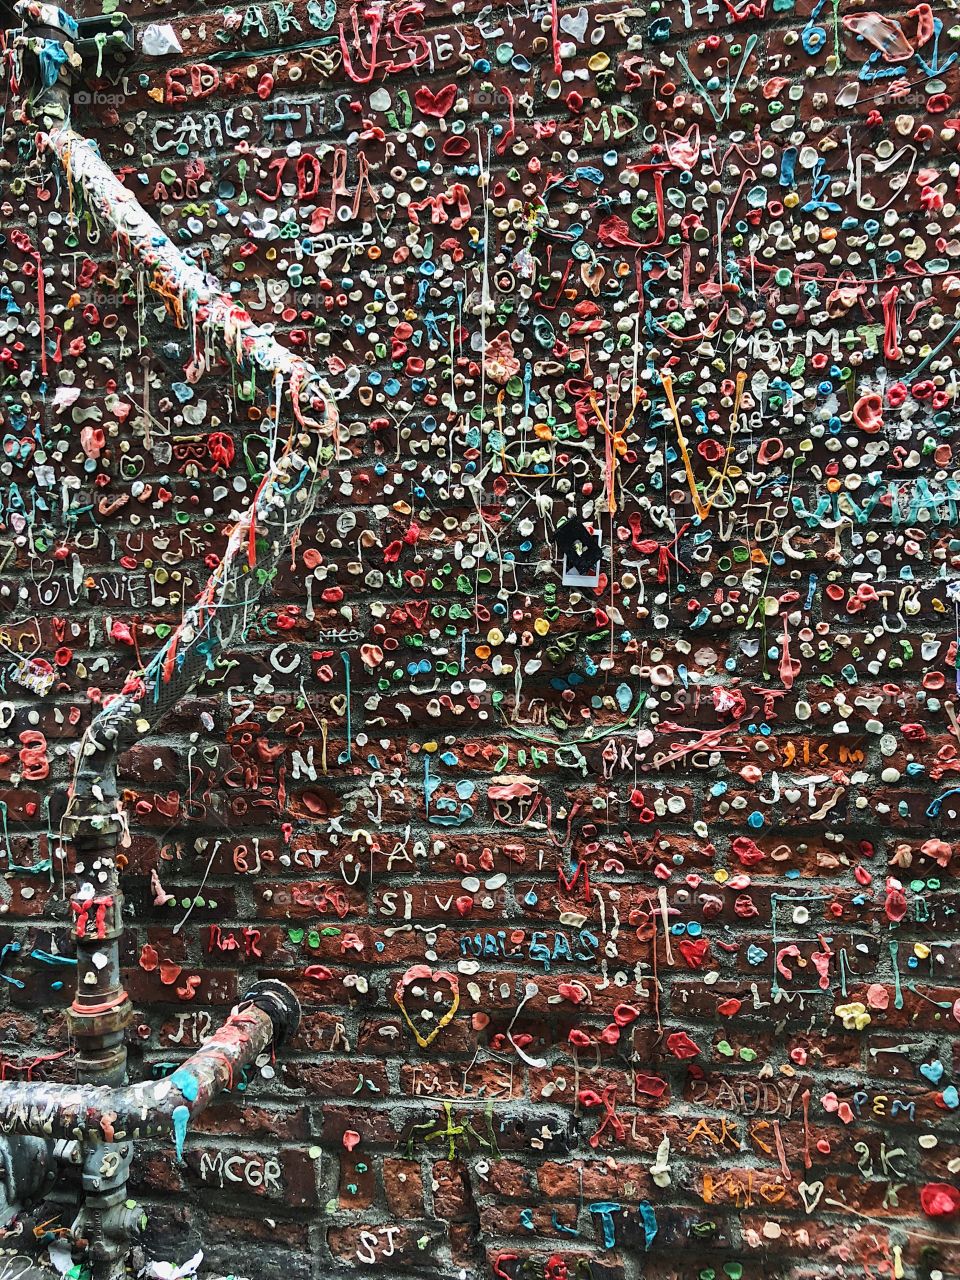 Gum wall in Seattle, WA